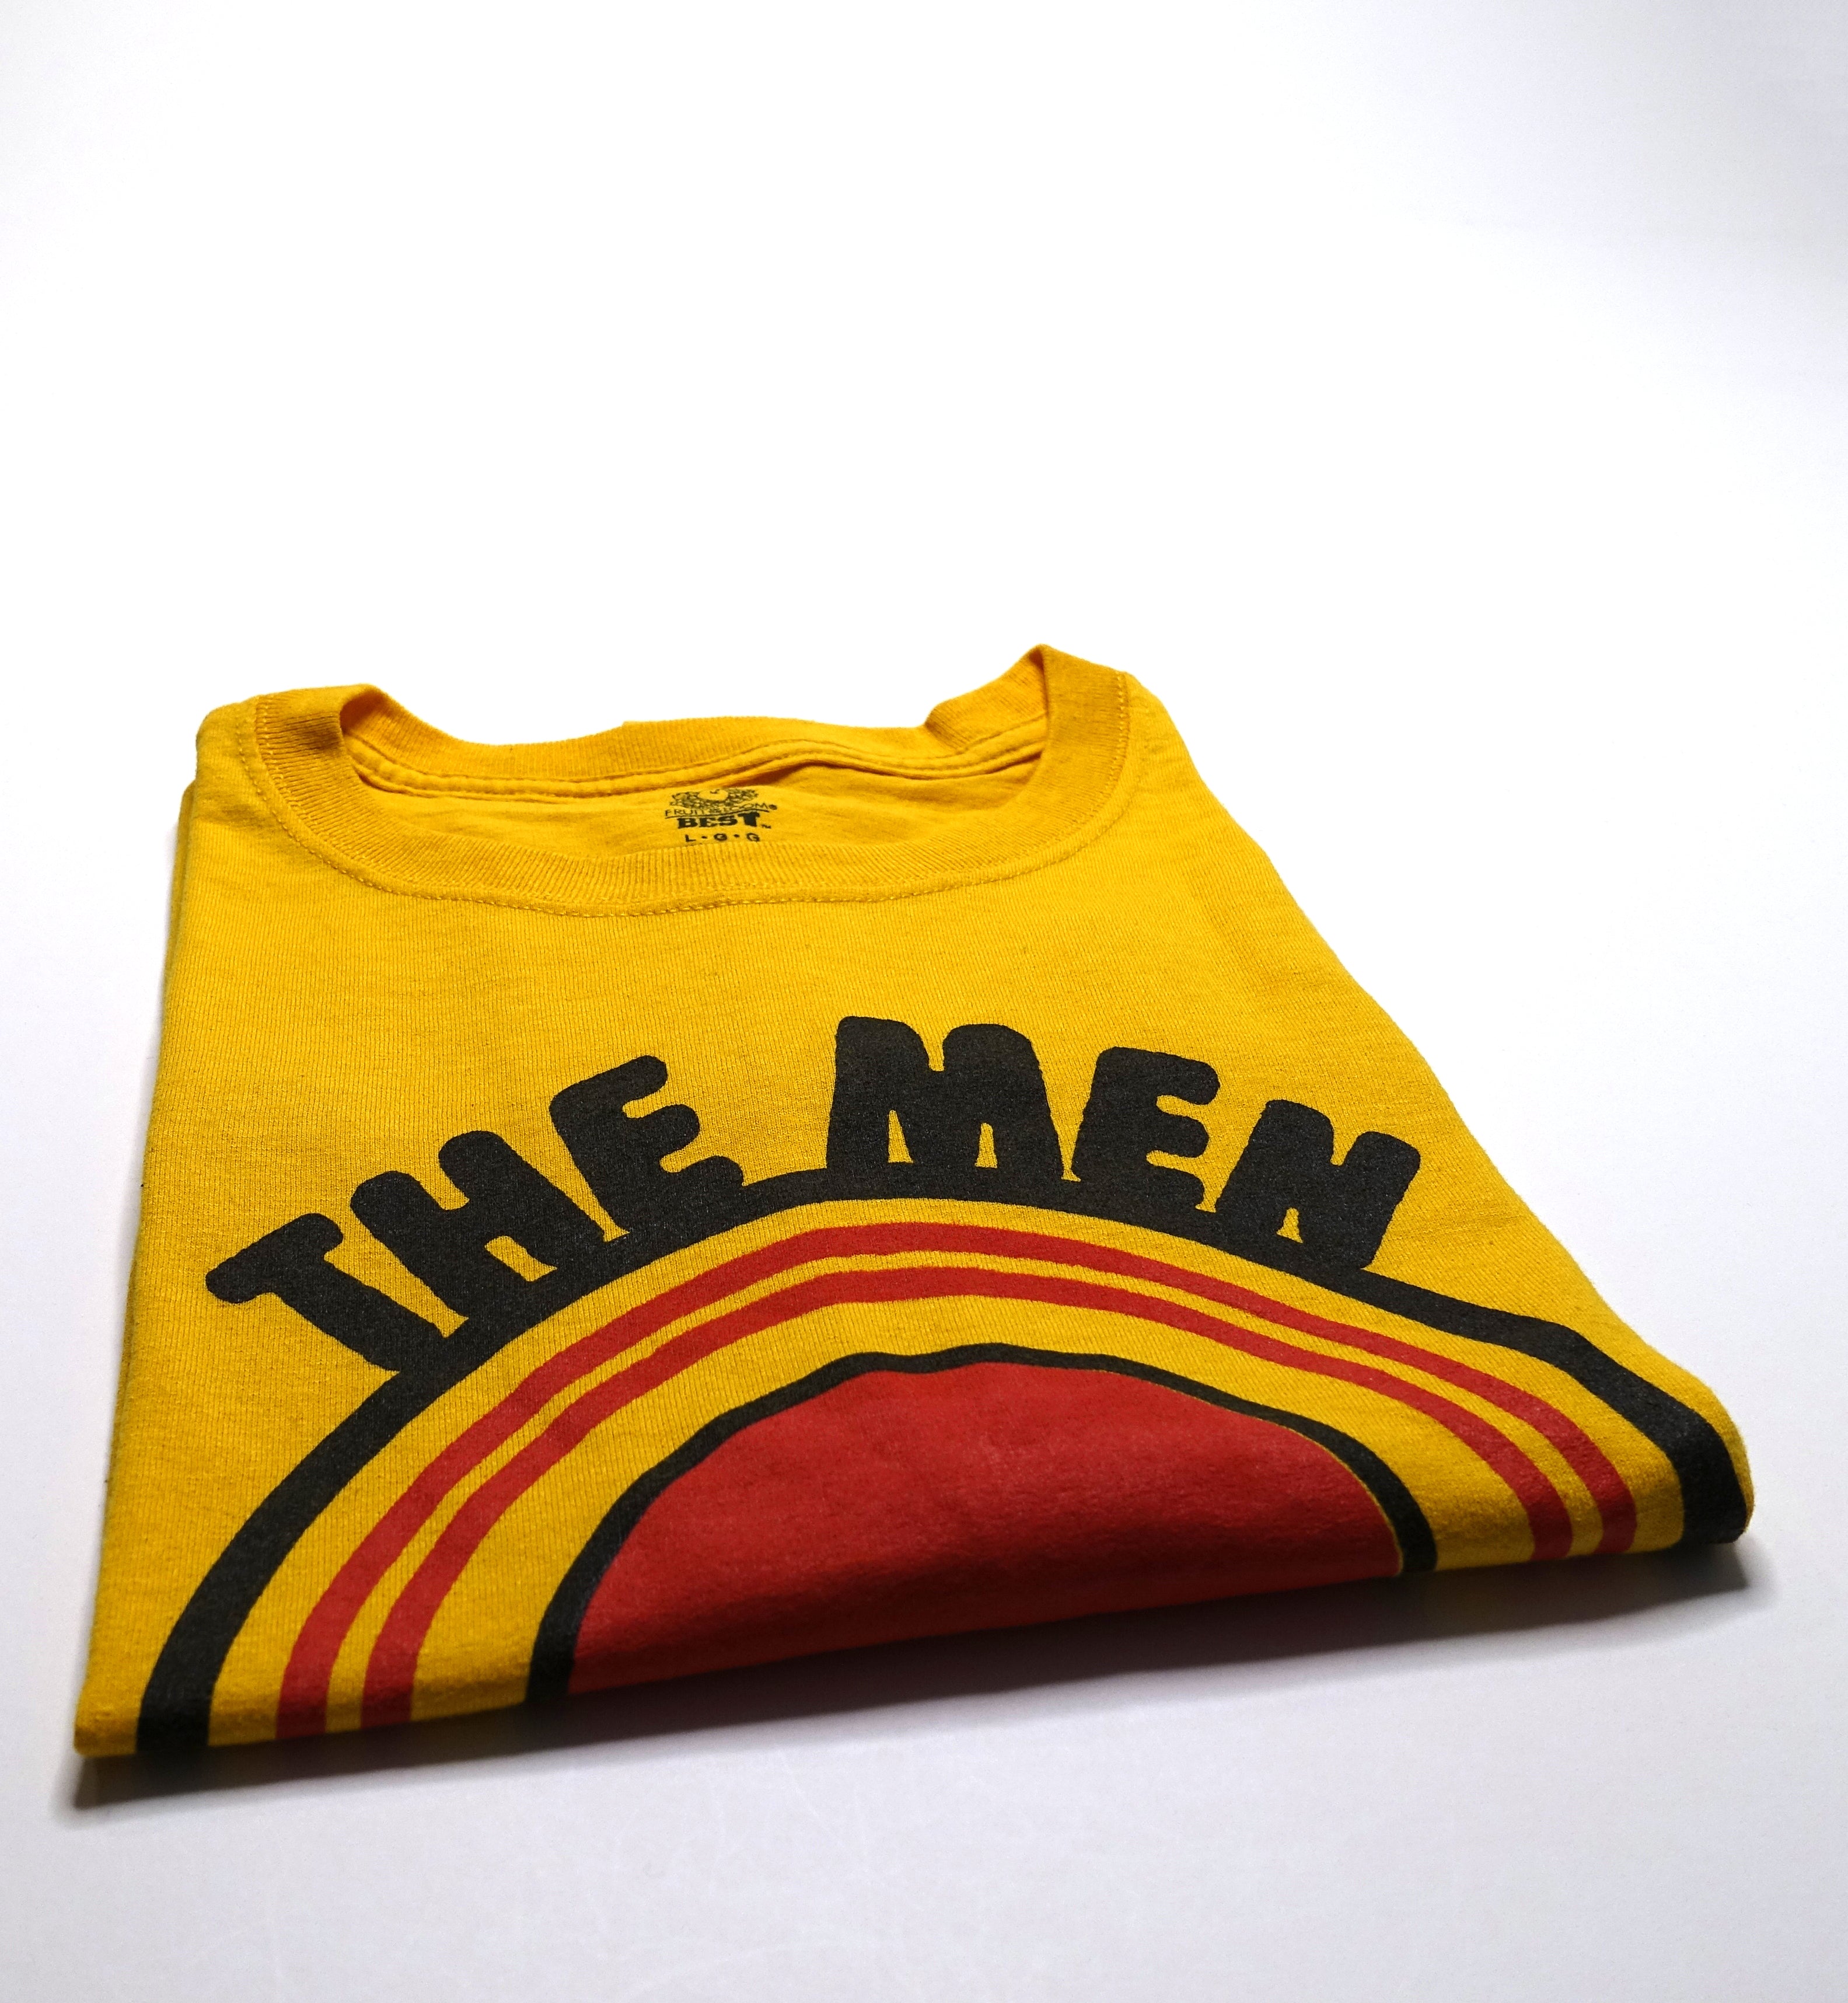 The Men - Circle / Open Your Heart 2012 Tour Shirt Size Large